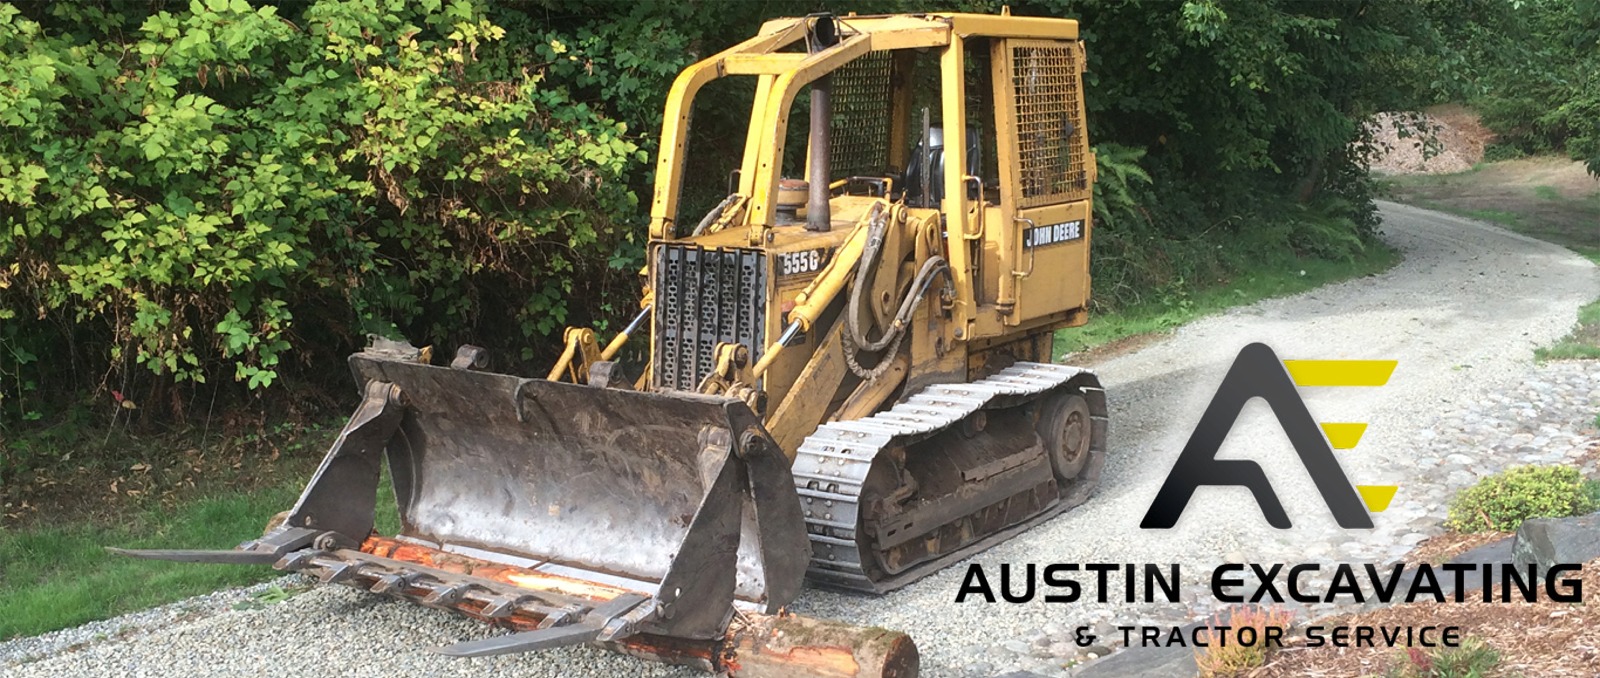 Austin Excavating & Tractor Service